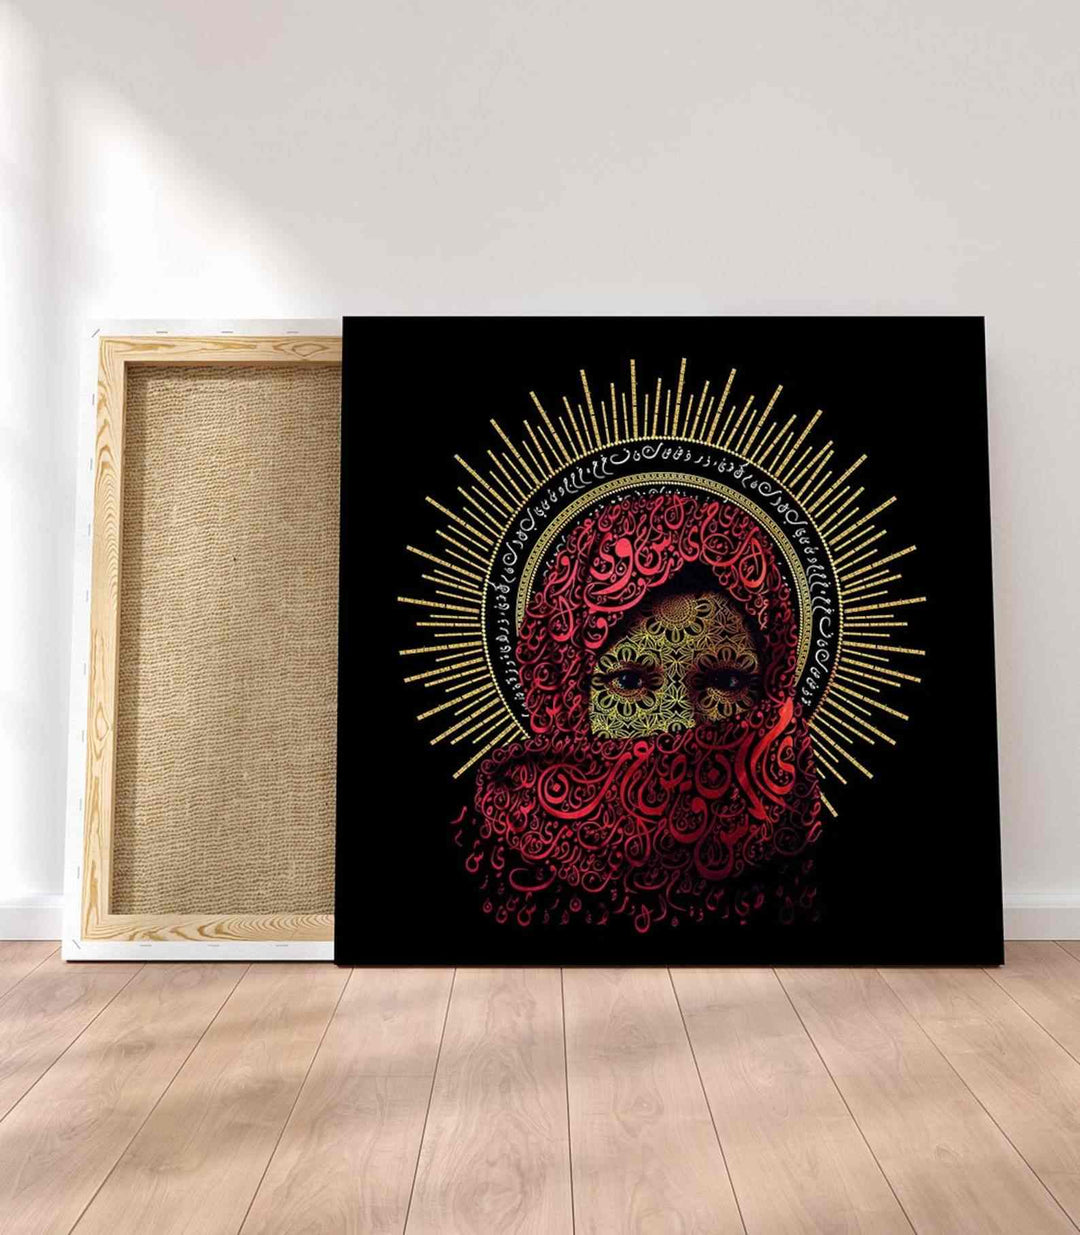 Hijab Themed Oil Painting Reproduction Canvas Print Islamic Wall Art - Islamic Wall Art Store